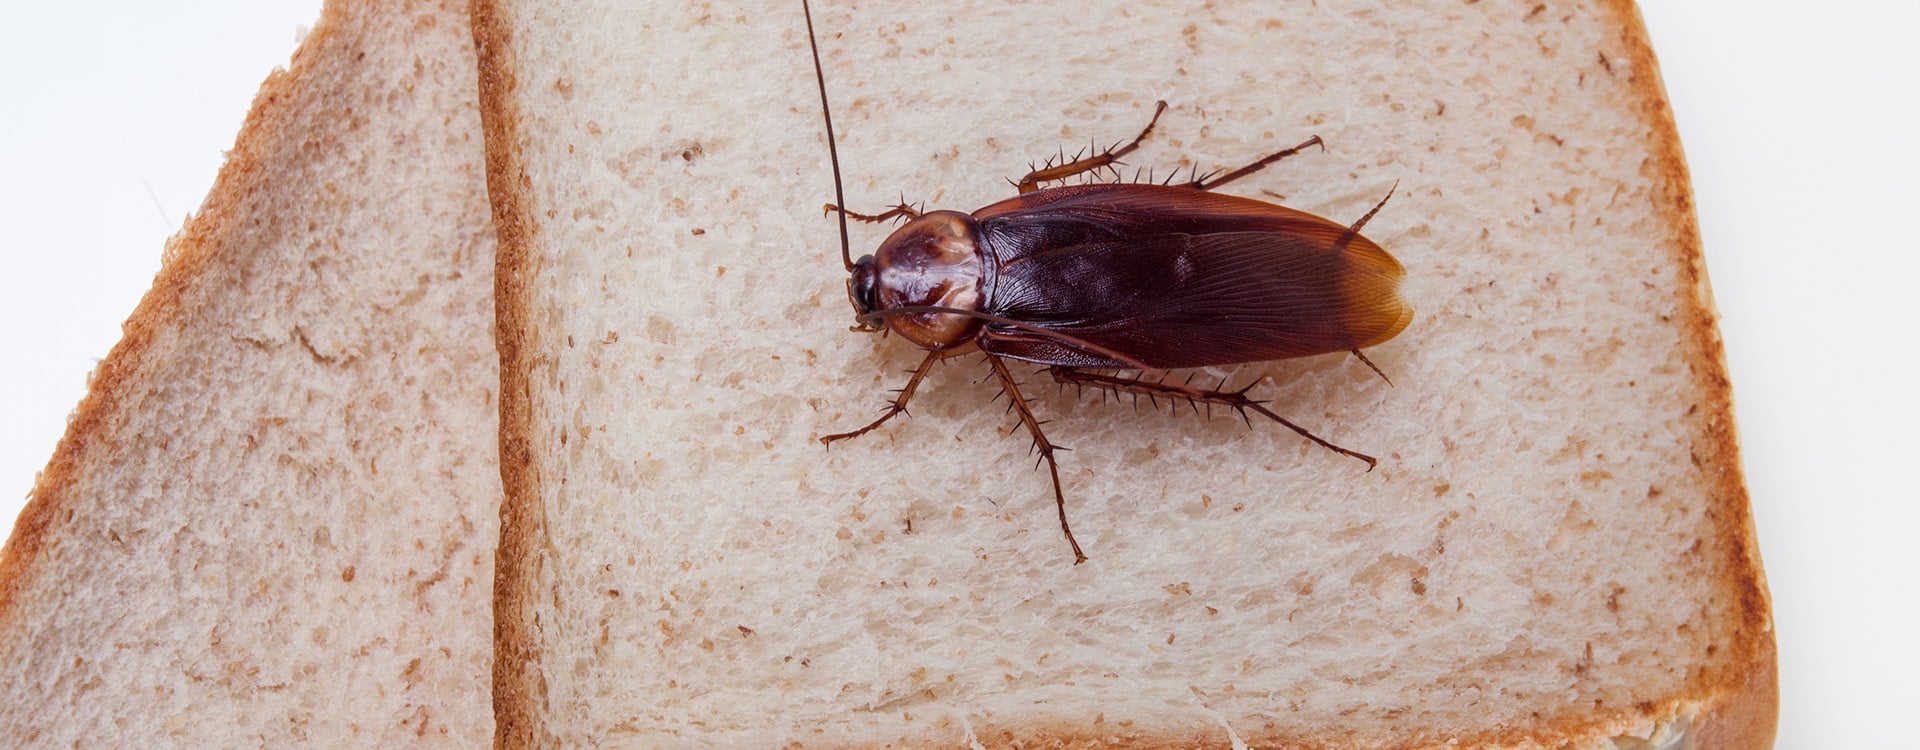 american cockroach inside jacksonville home